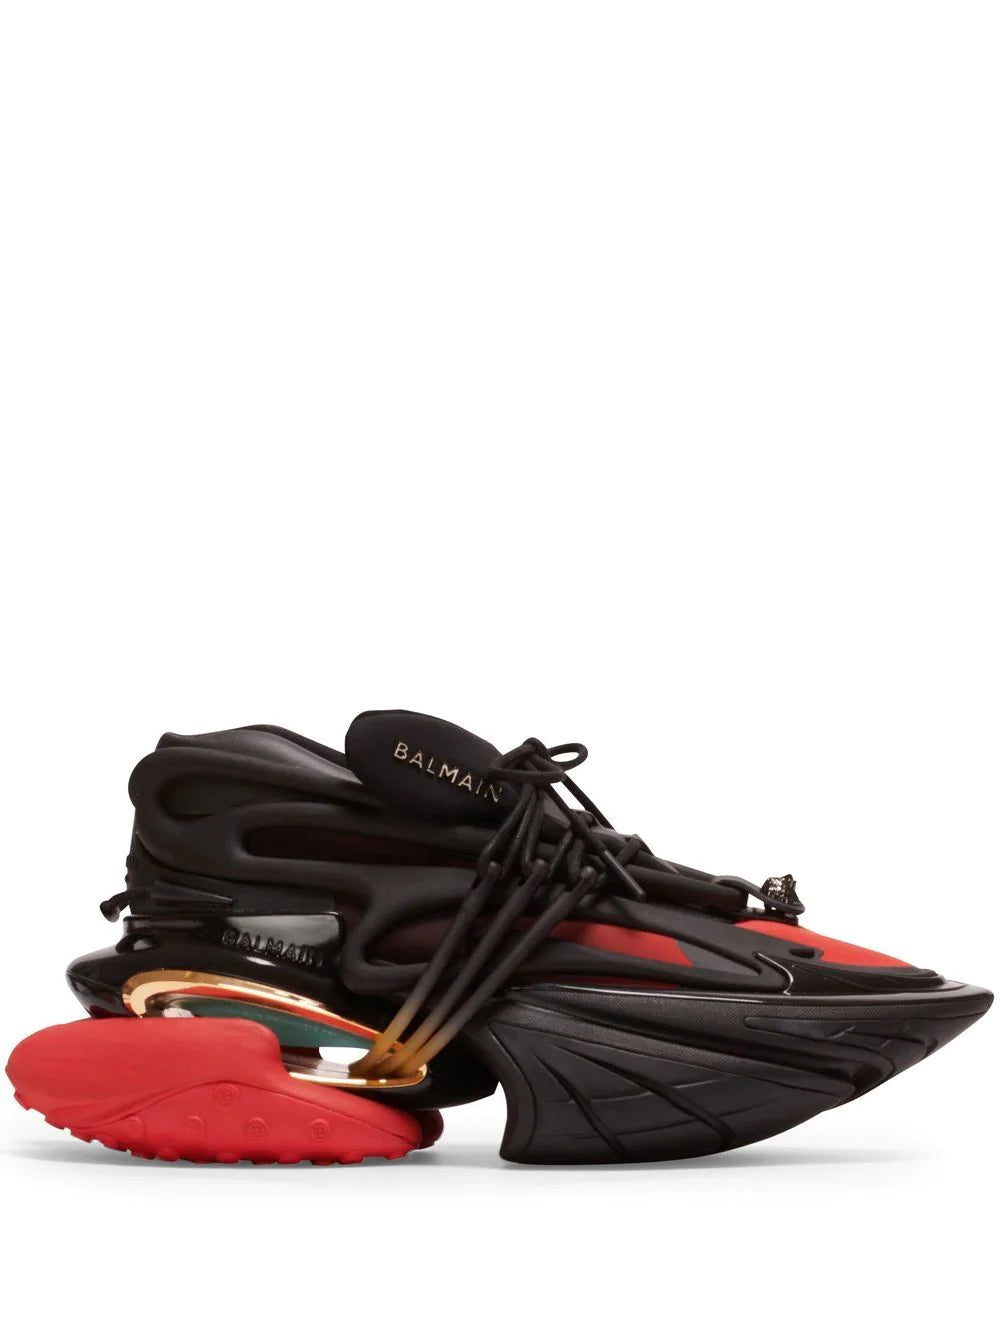 BALMAIN MEN Unicorn Low Top Sneakers Black/Red - MAISONDEFASHION.COM